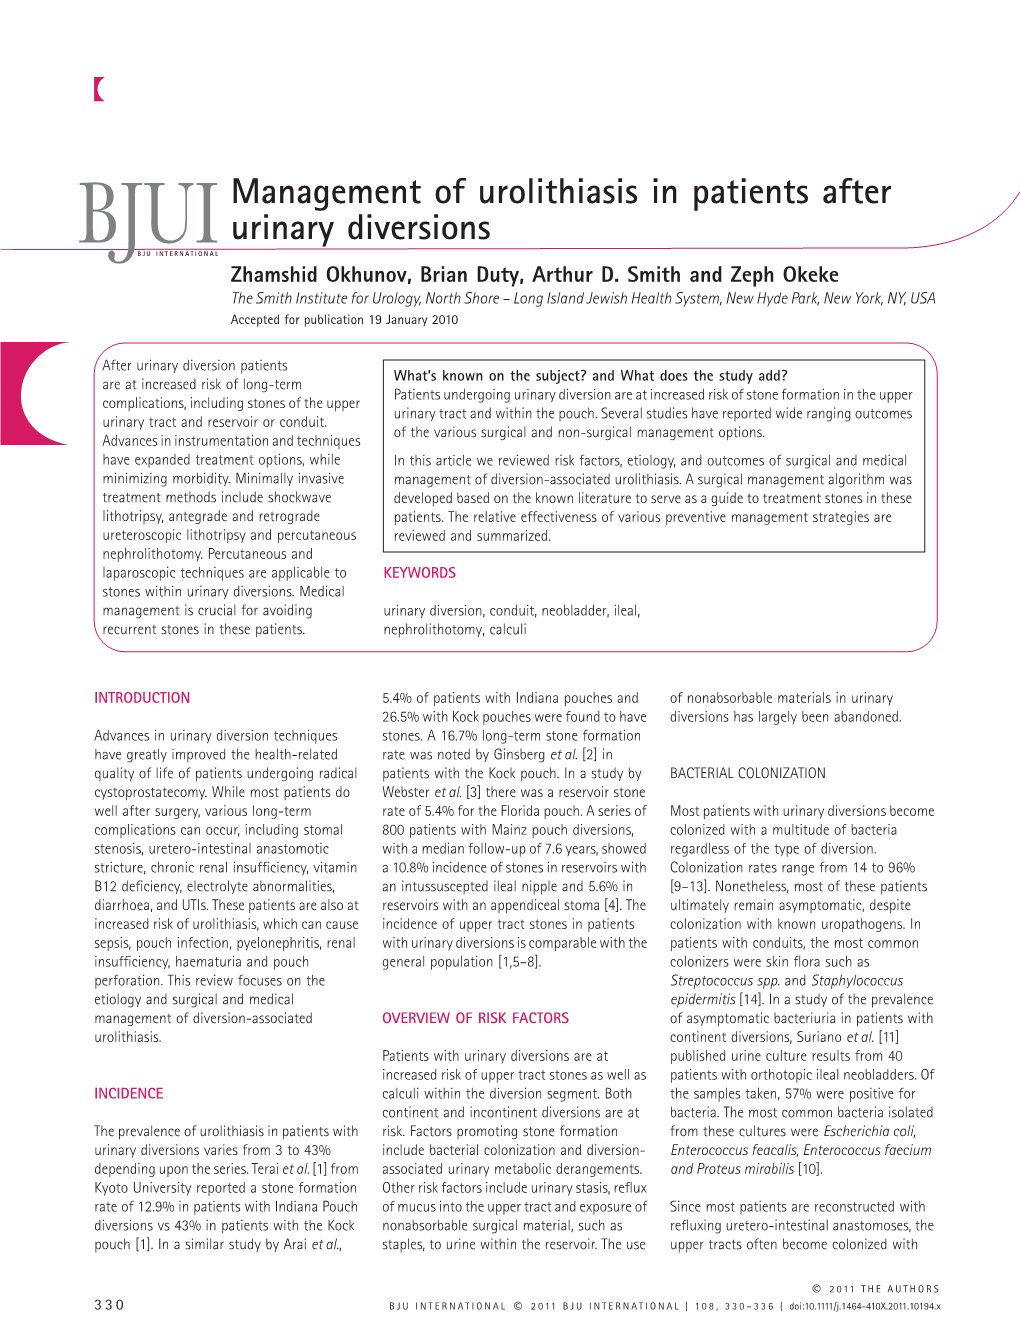 Management of Urolithiasis in Patients After Urinary Diversions BJUIBJU INTERNATIONAL Zhamshid Okhunov, Brian Duty, Arthur D